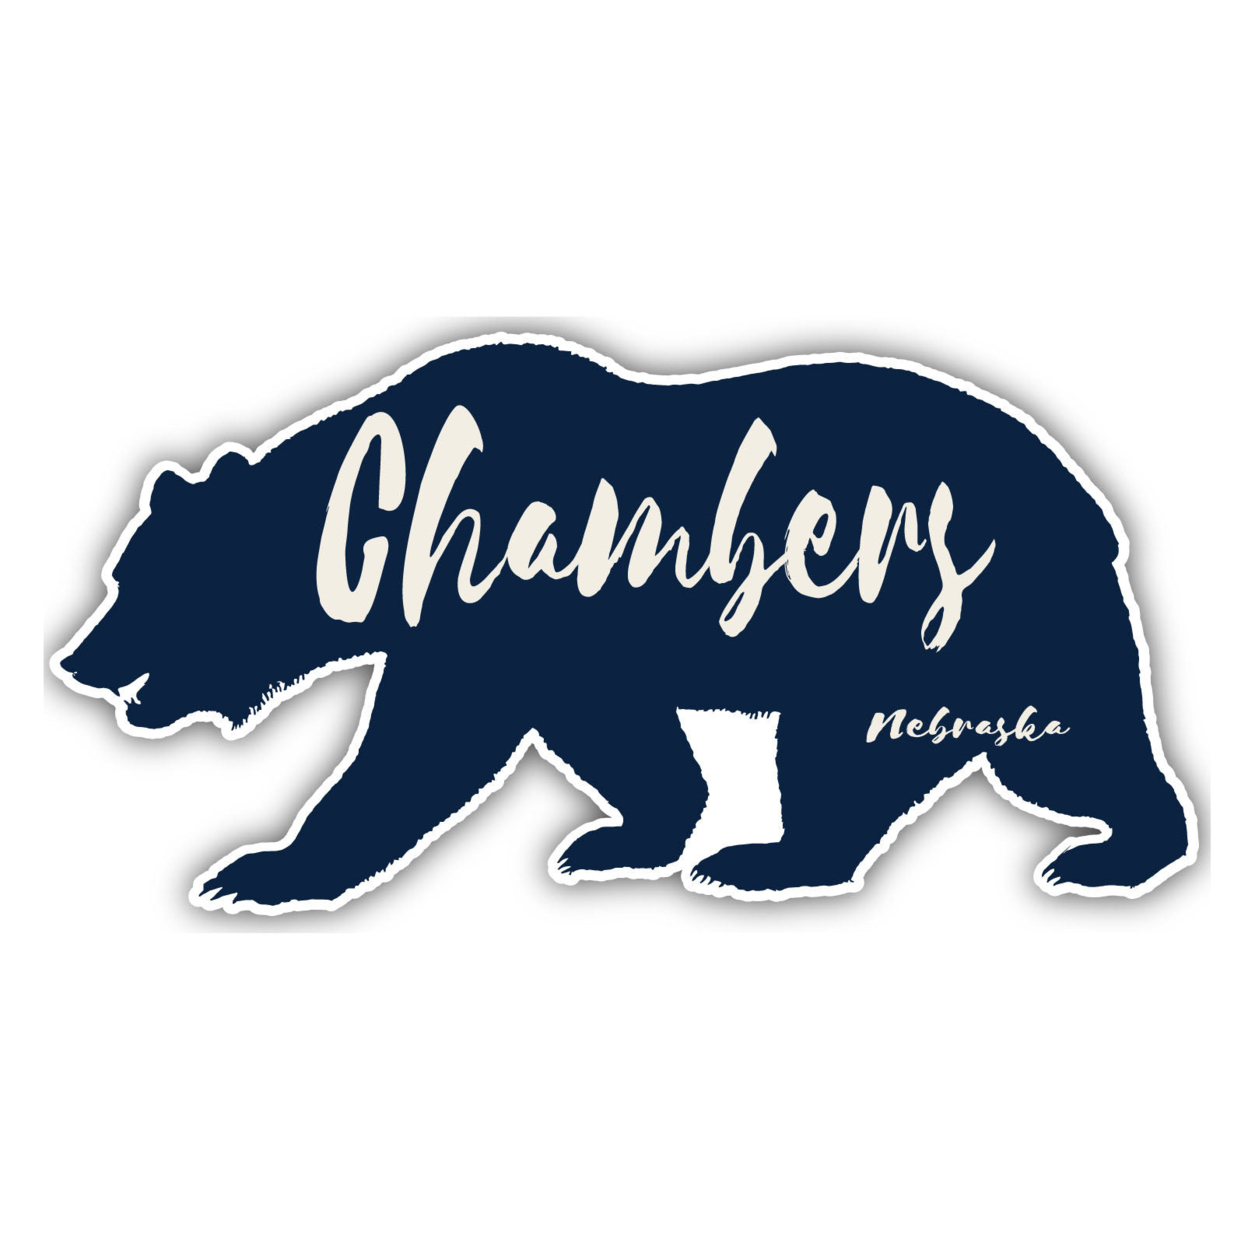 Chambers Nebraska Souvenir Decorative Stickers (Choose Theme And Size) - 4-Pack, 12-Inch, Bear